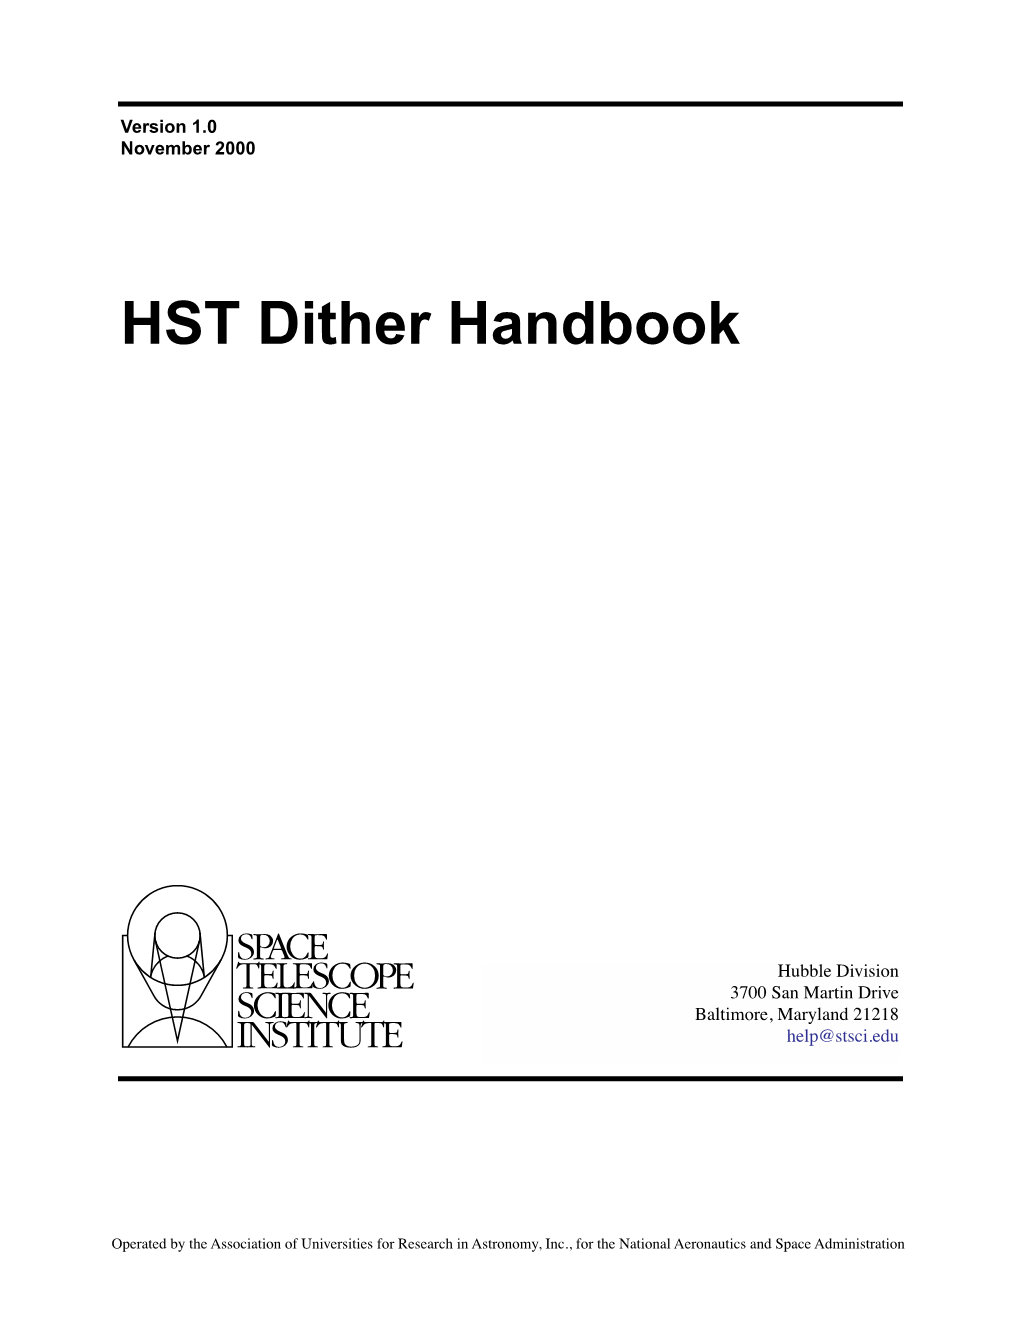 HST Dither Handbook V1.0